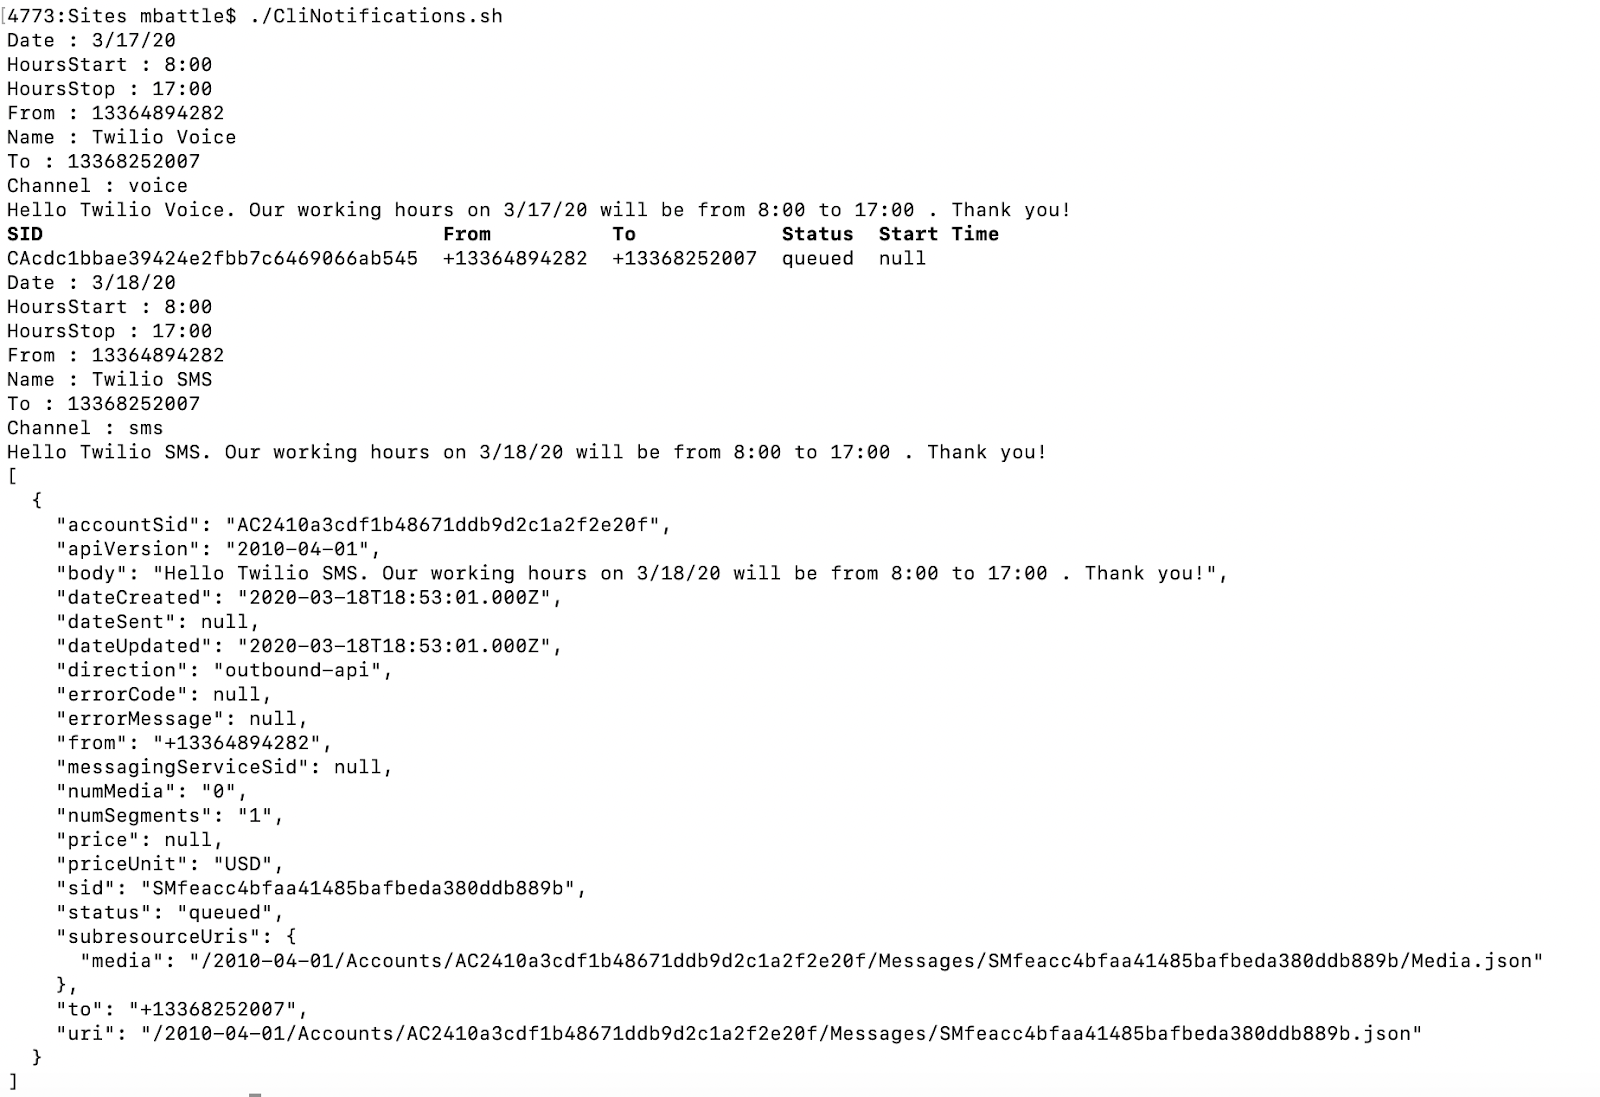 Twilio CLI bash script output